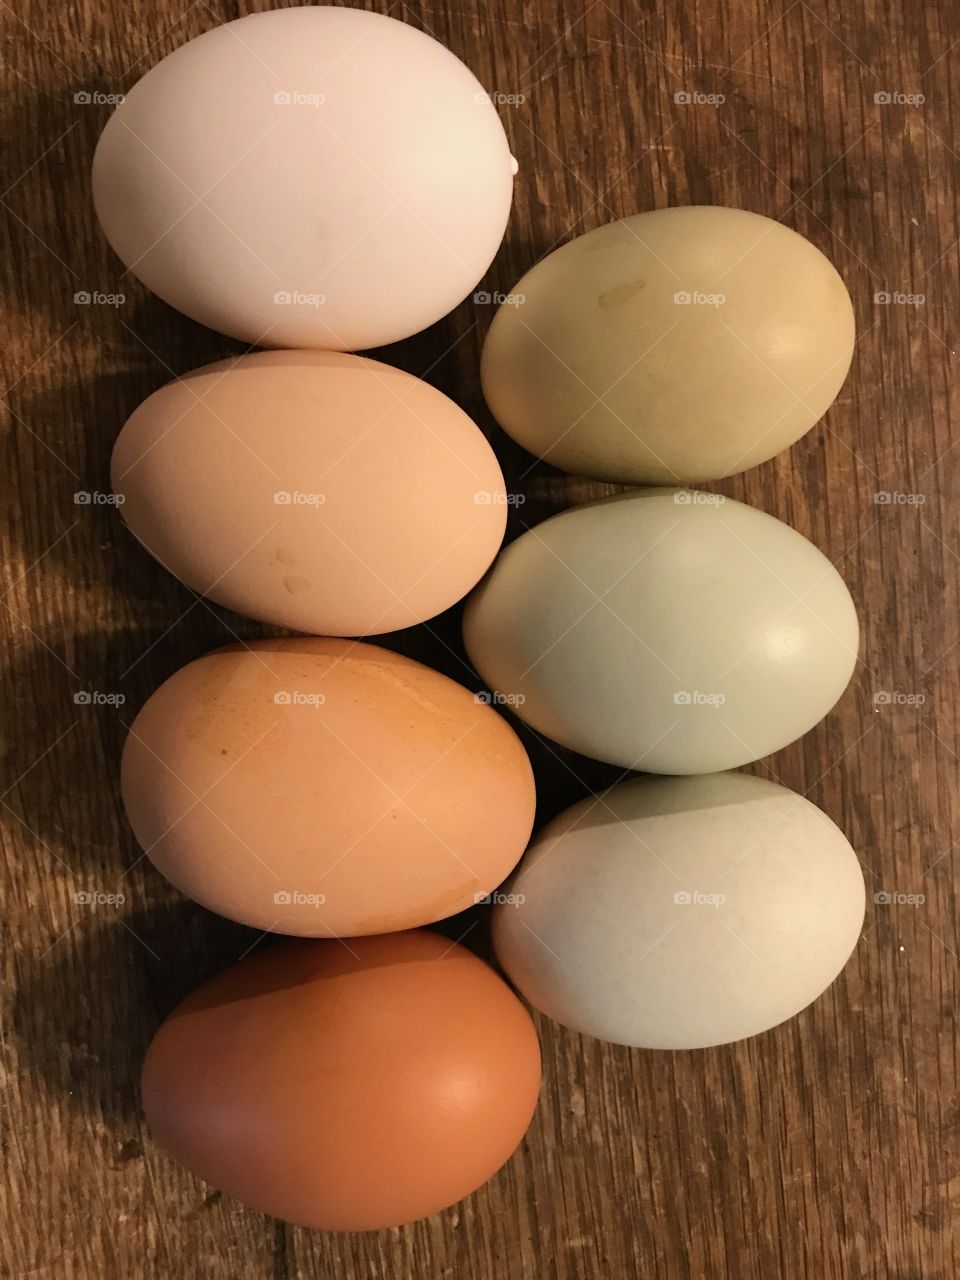 Eggs glorious eggs 